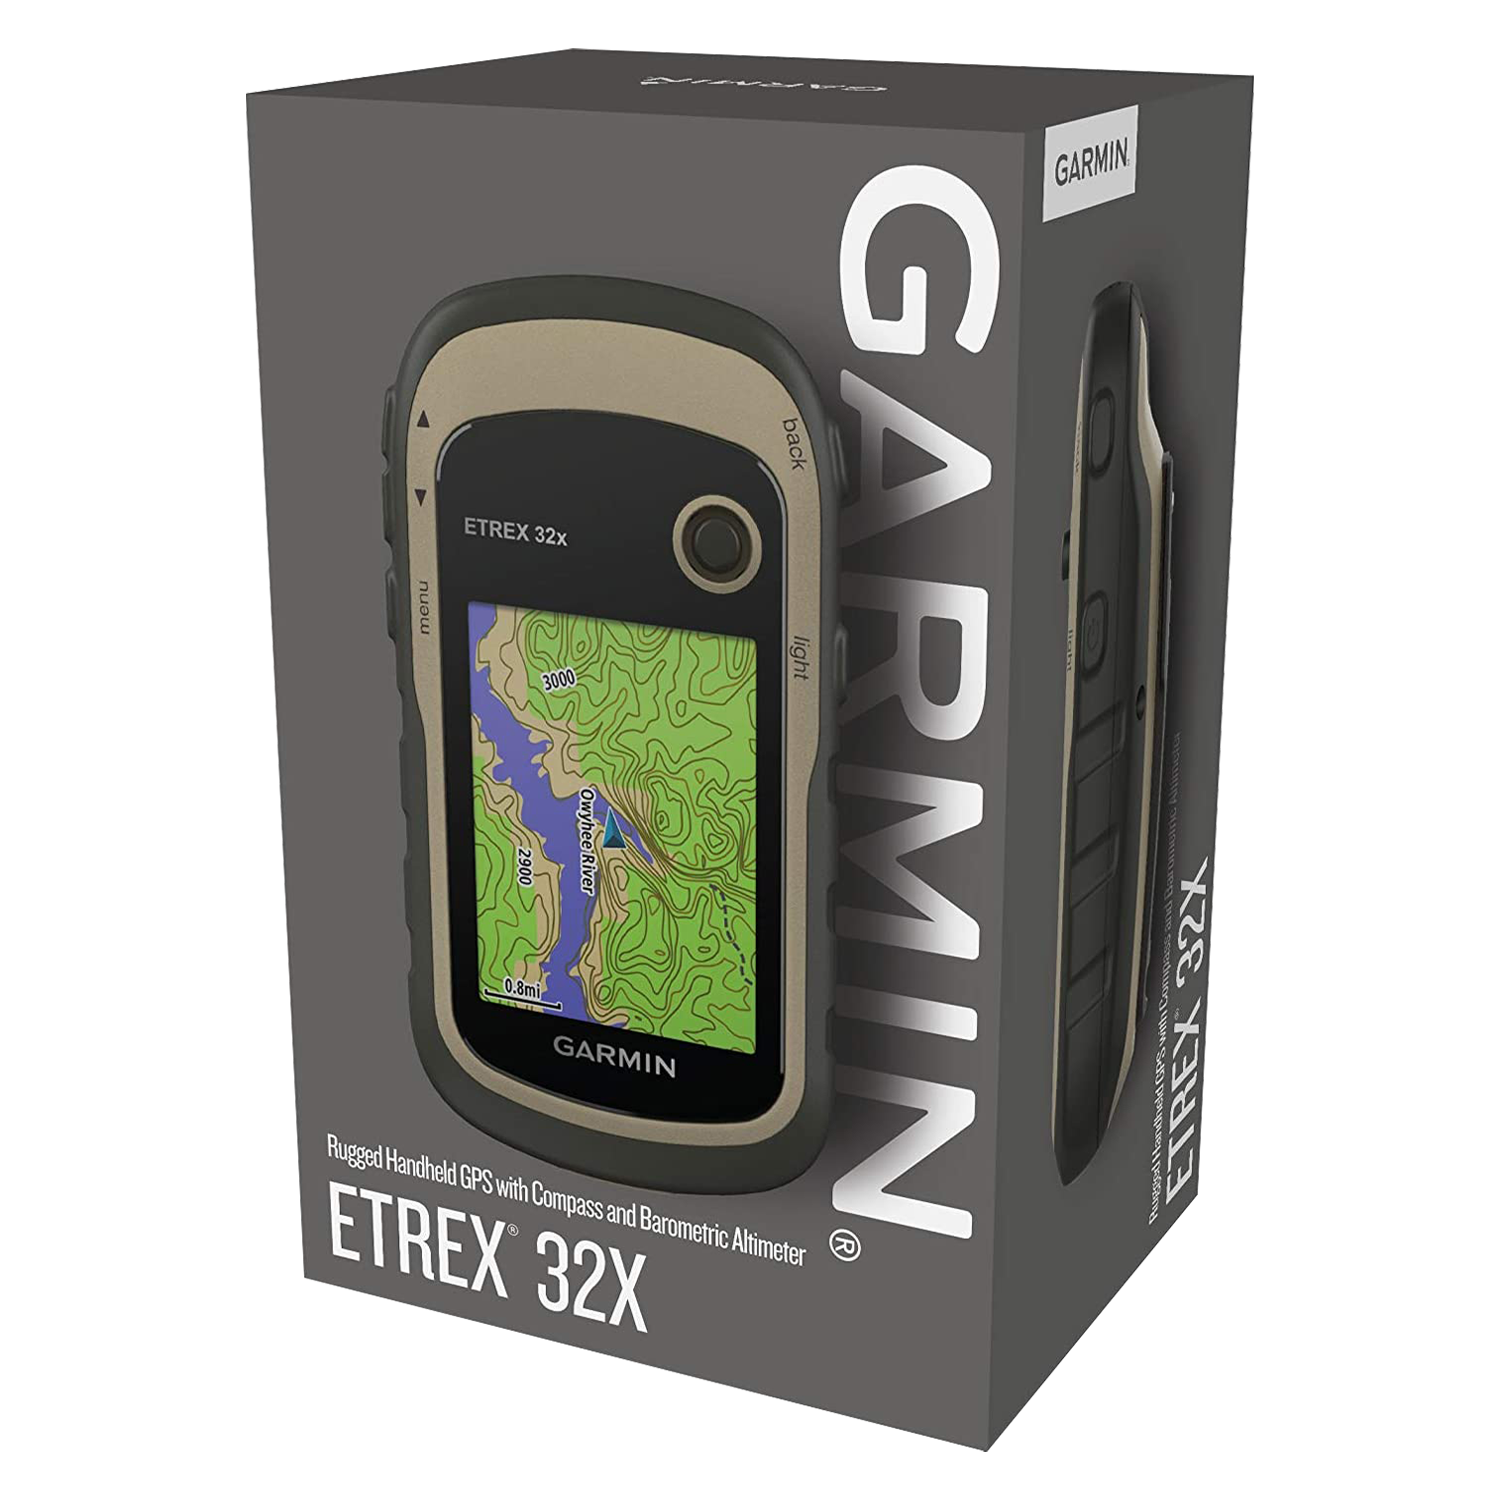 GPS Garmin Etrex 32X / Tela 2.2 / IPX7 - Preto / Dourado (010-02257-03)
